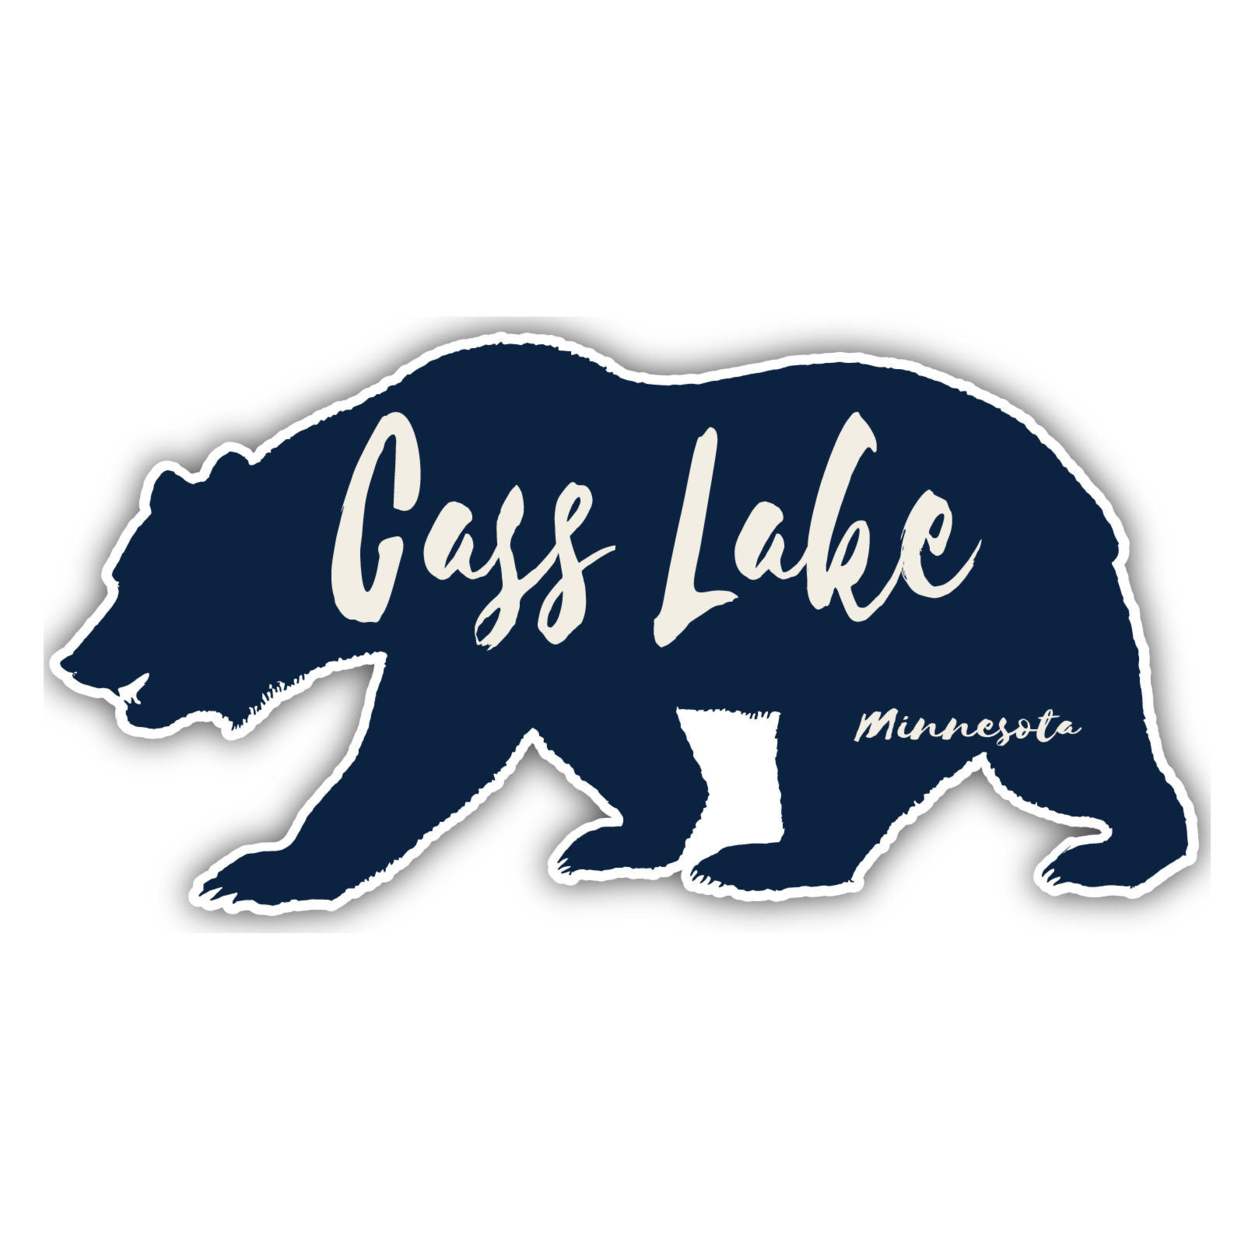 Cass Lake Minnesota Souvenir Decorative Stickers (Choose Theme And Size) - Single Unit, 10-Inch, Bear